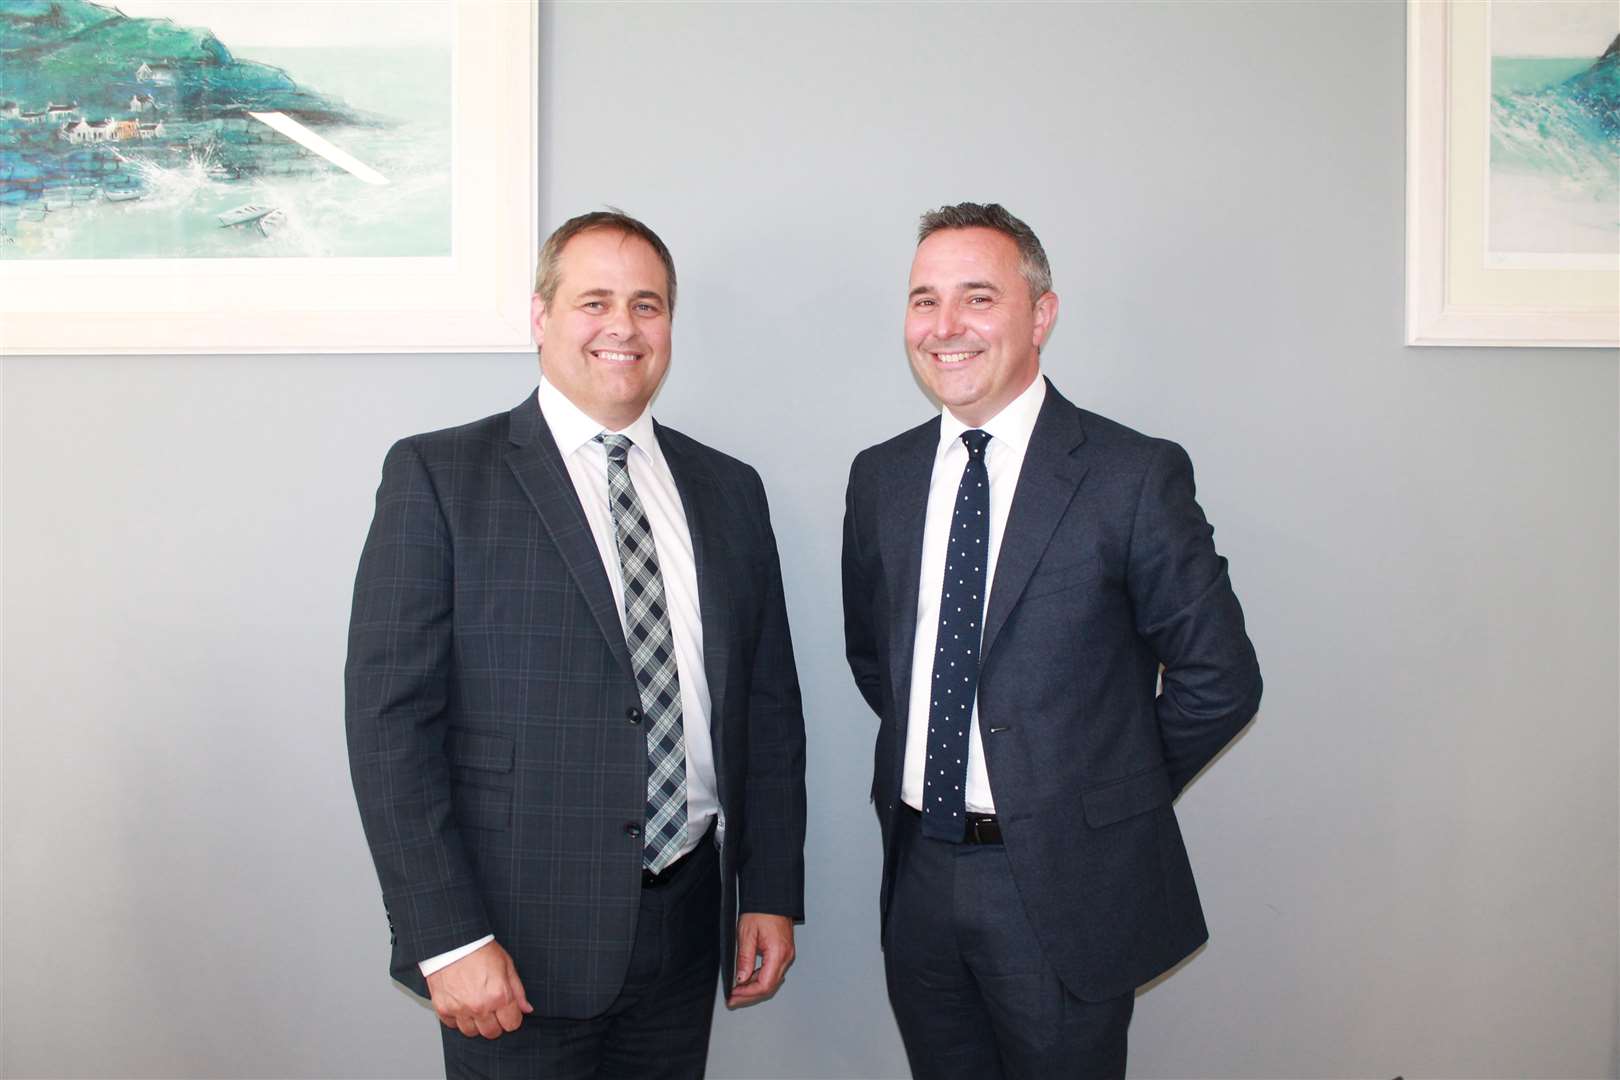 SBP managing partner John Hannah (left) with new business development manager Jamie Smith.